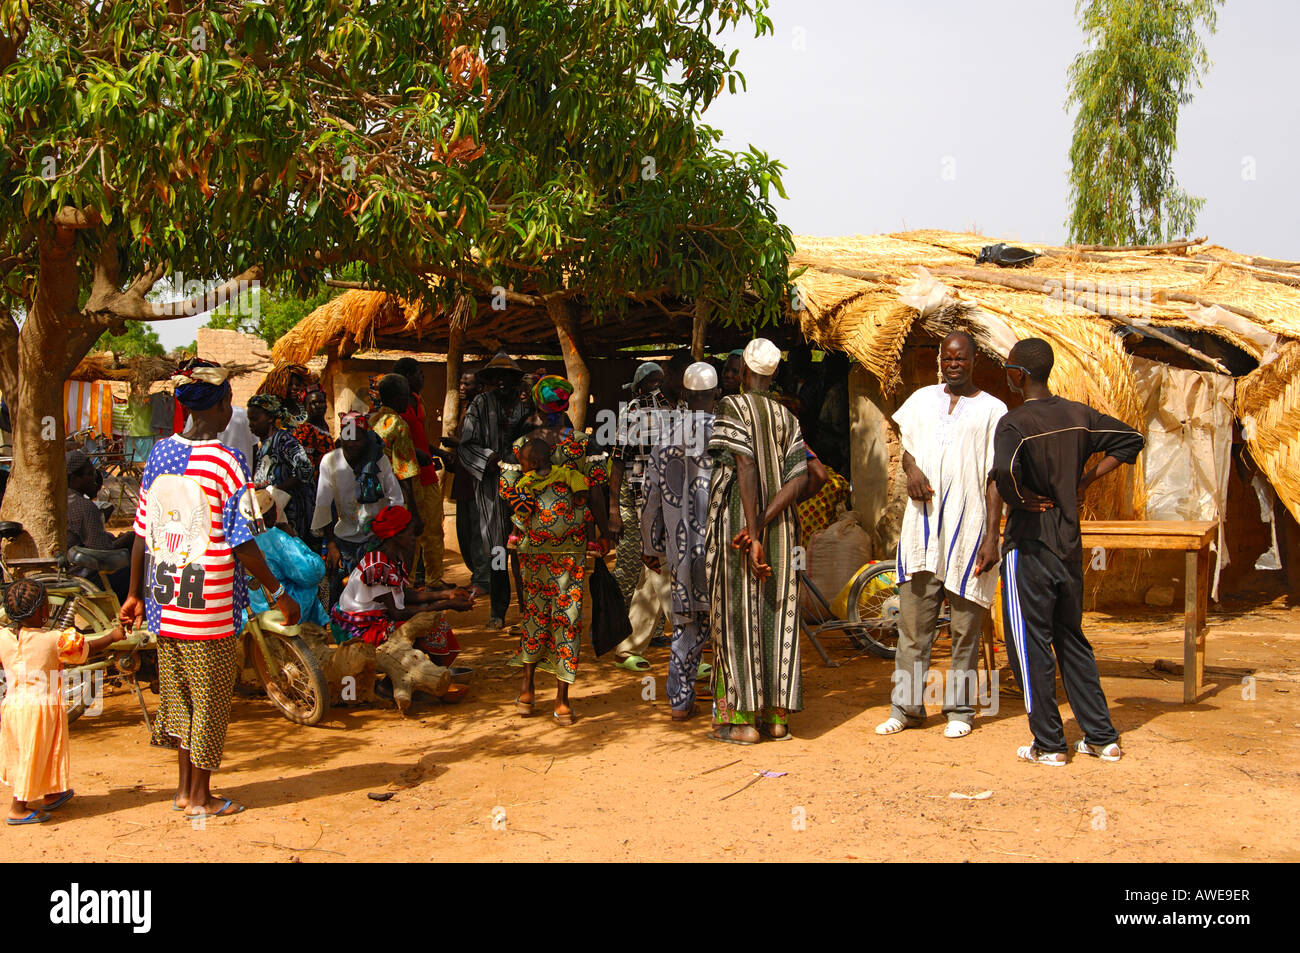 Scene in an African village, Burkina Faso Stock Photo